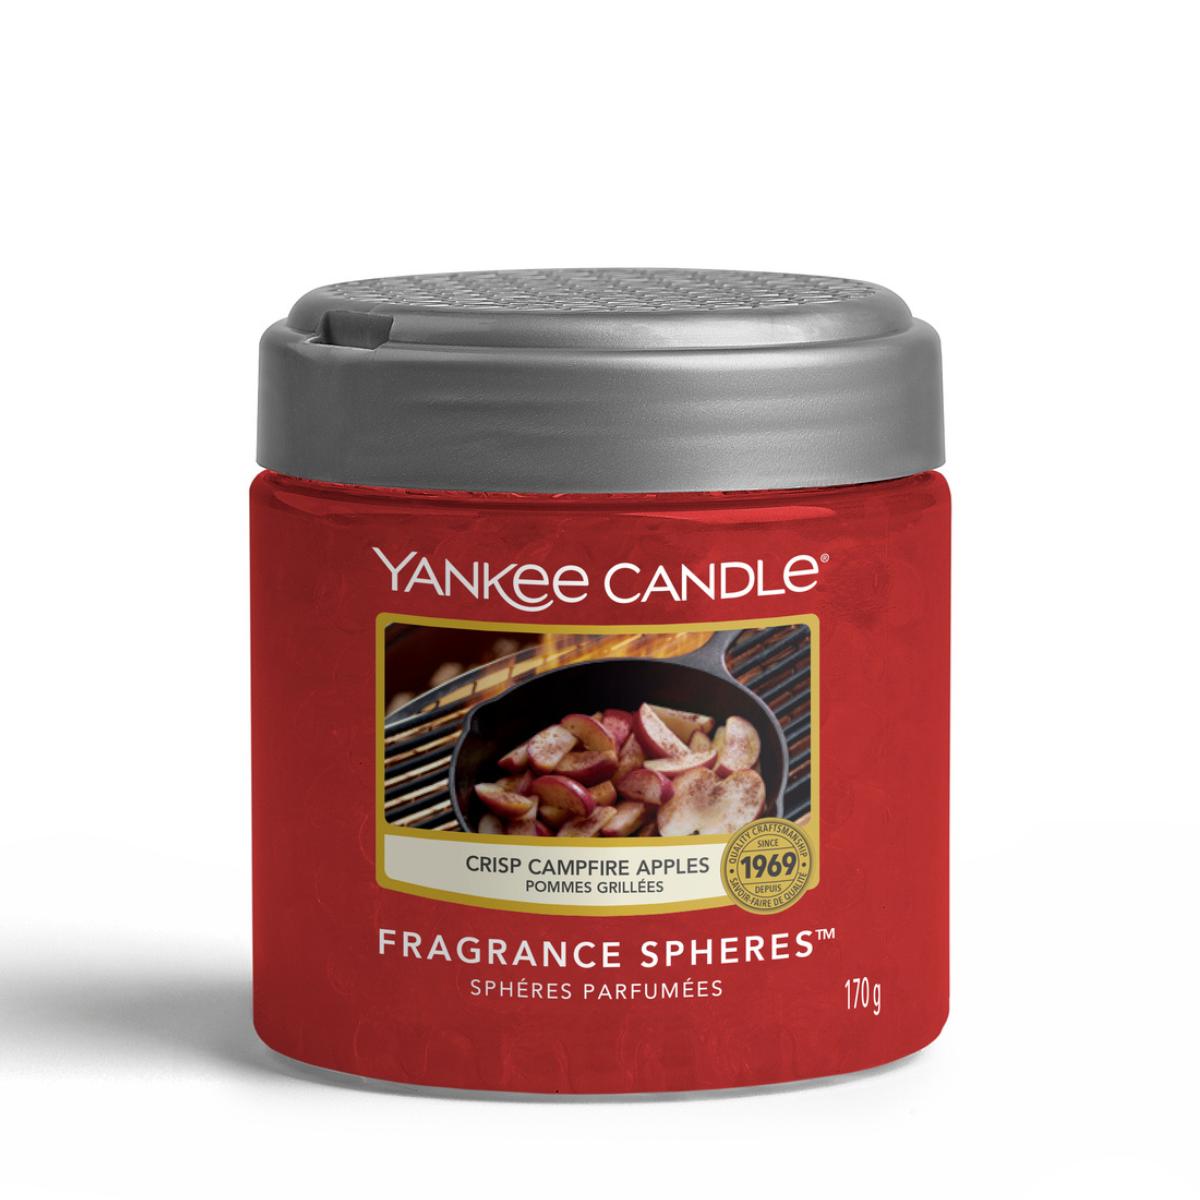 Crisp Campfire Apples - Fragrance Spheres 170g von Yankee Candle